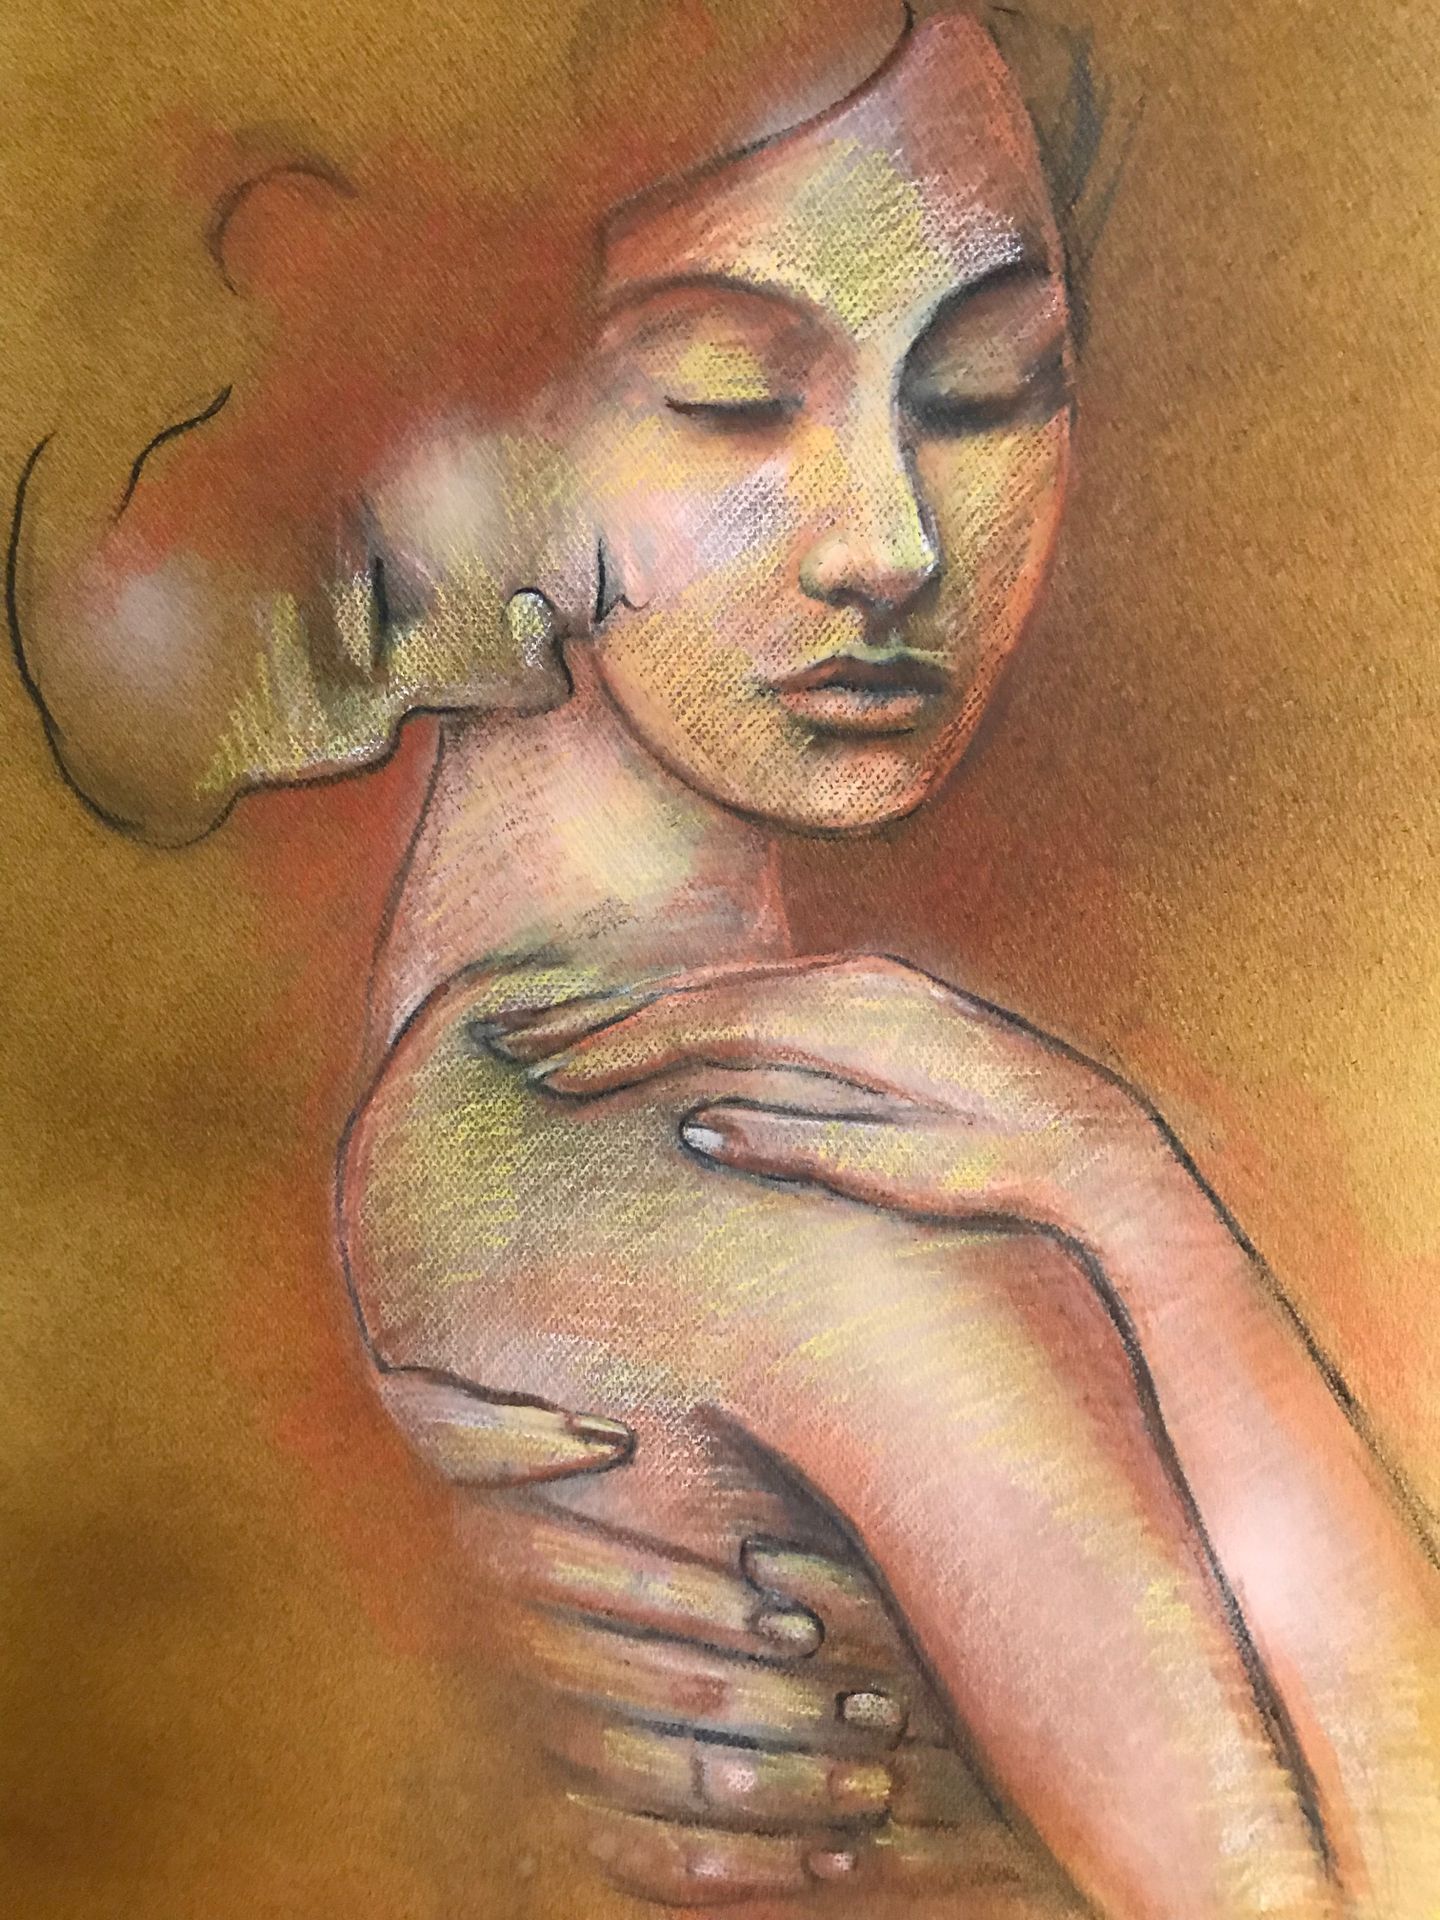 Maria Amaral (née en 1950) Dónde estás?", 2019. Pastel sobre papel. 65 x 50 cm.